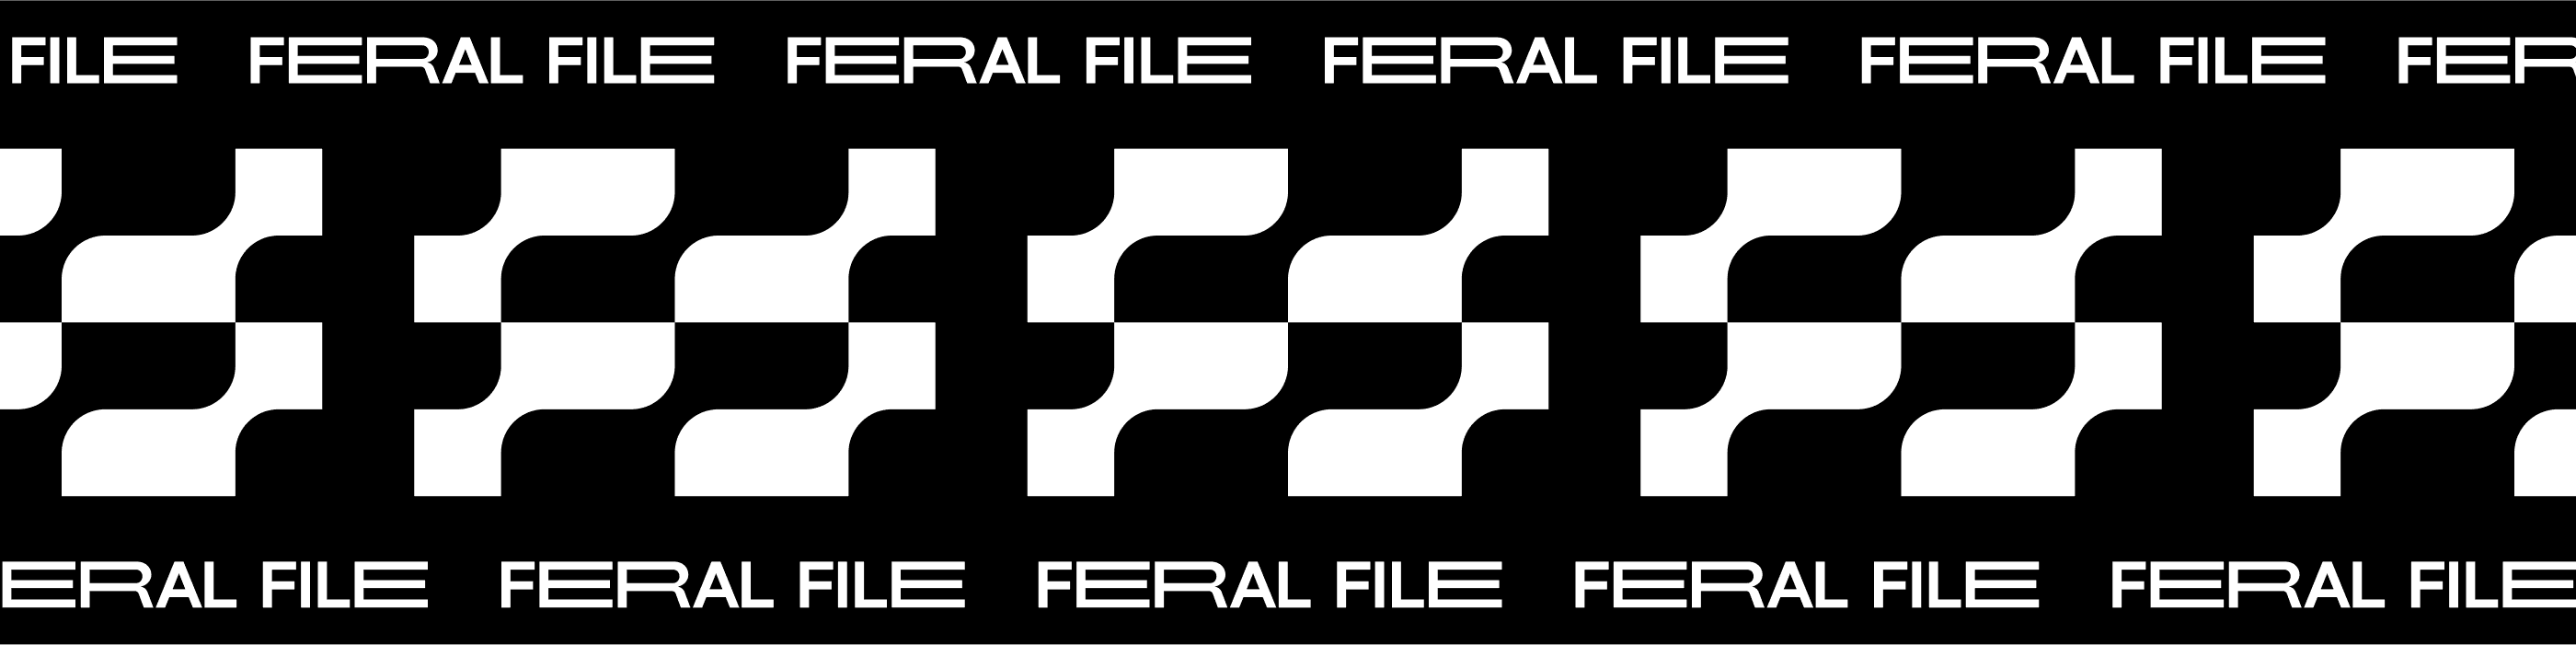 FeralFile banner